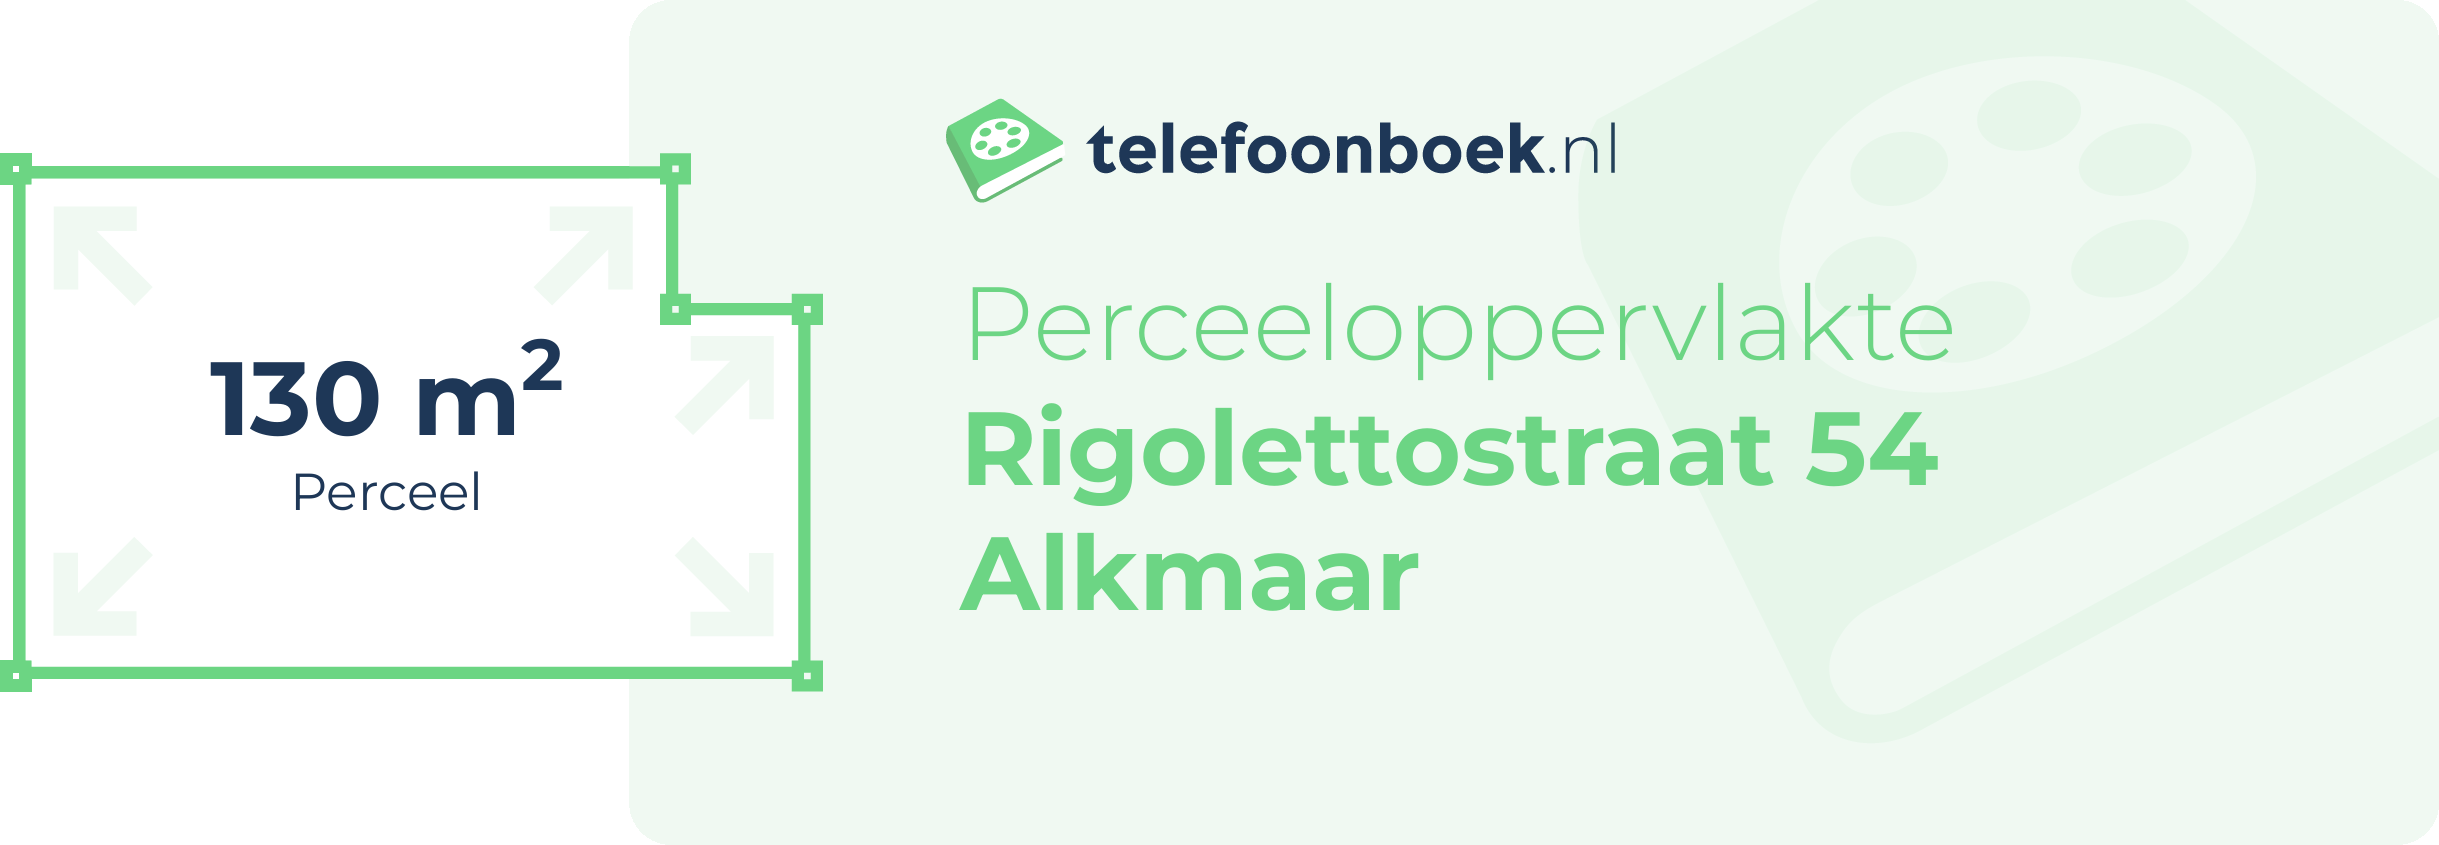 Perceeloppervlakte Rigolettostraat 54 Alkmaar